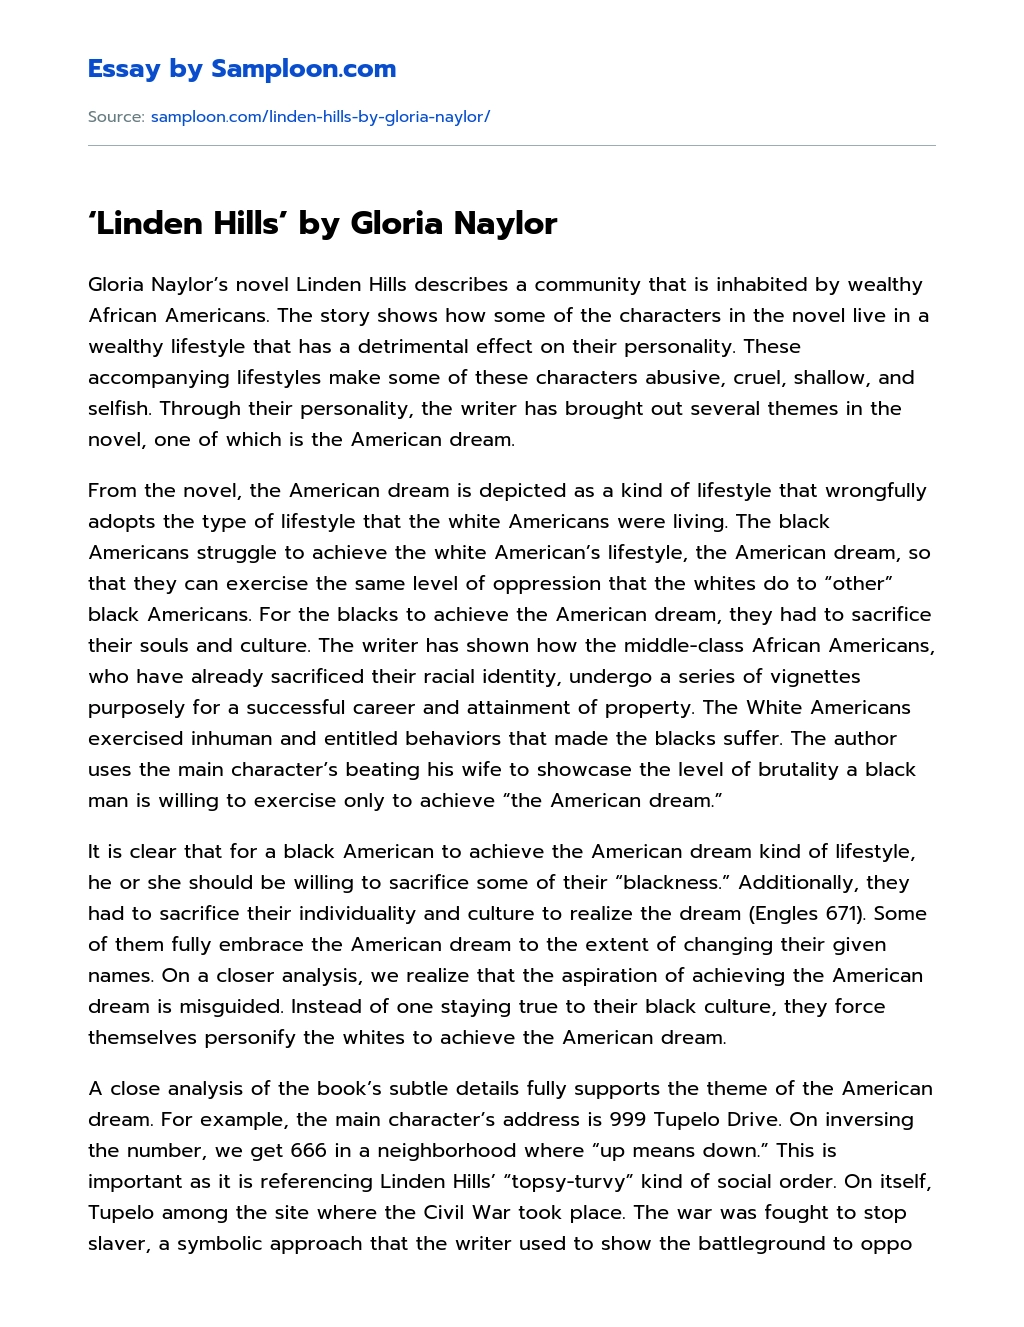 Linden Hills’ by Gloria Naylor Summary essay